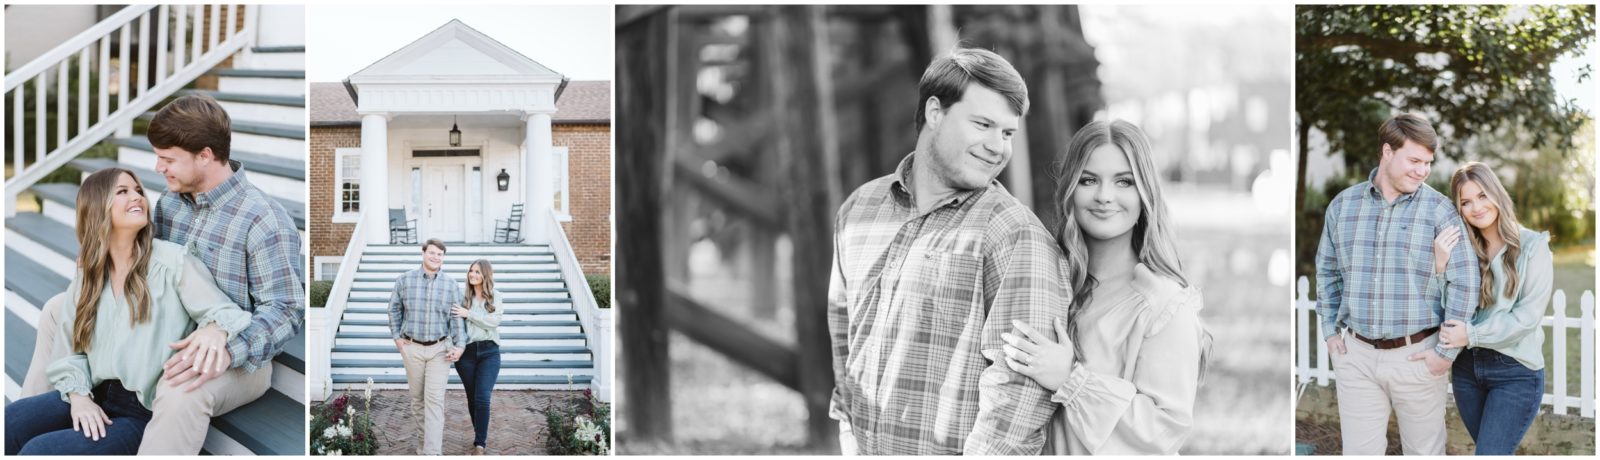 couple portraits taken for a wedding at Dodson farms